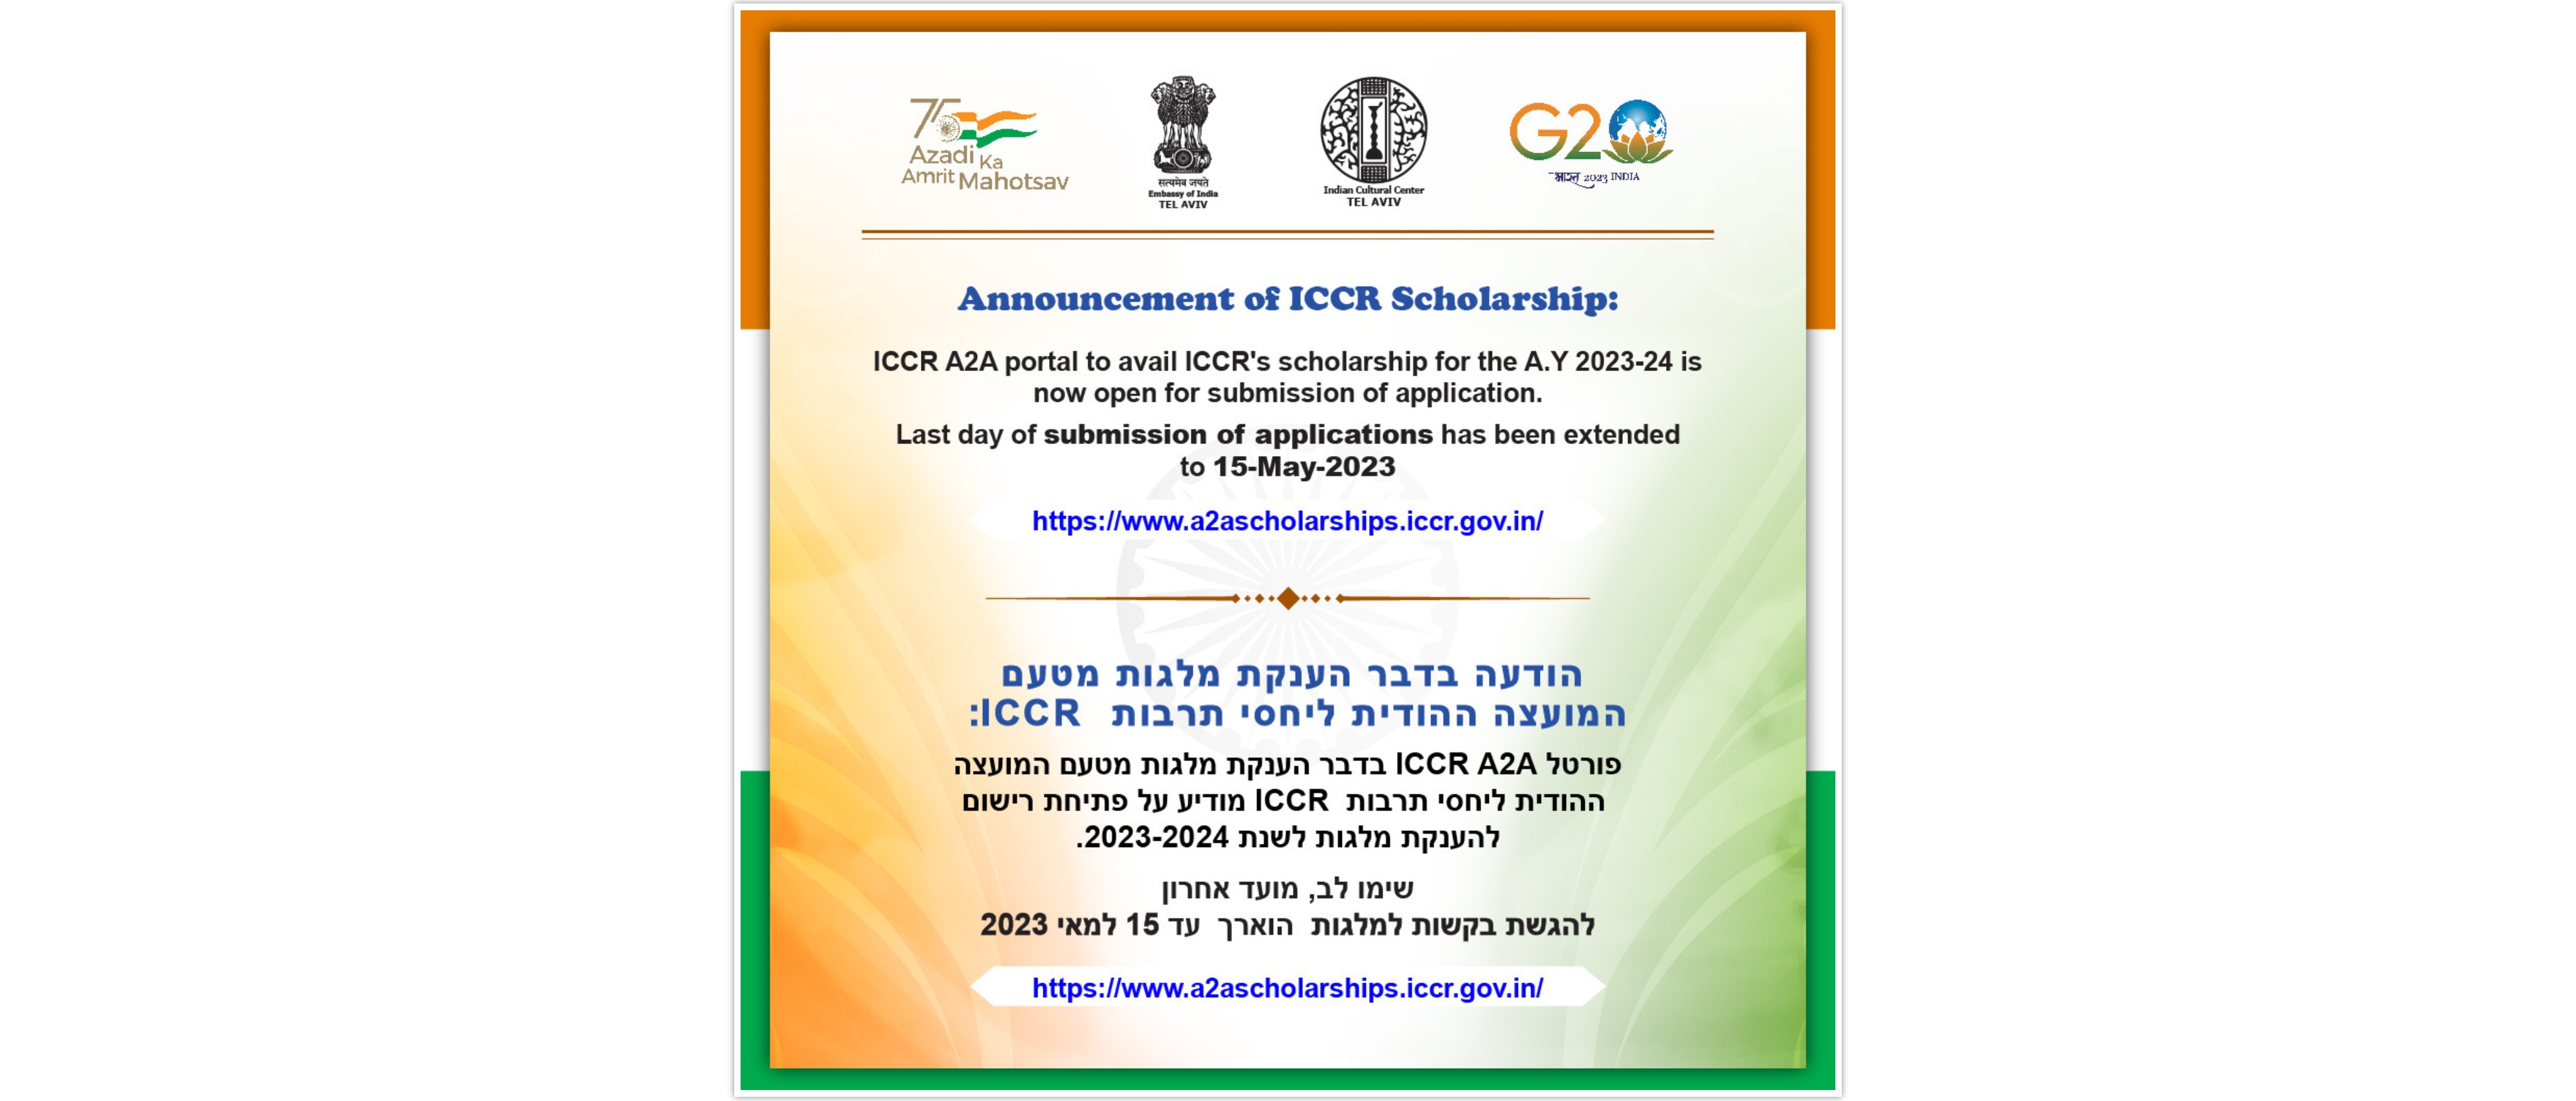  Announcement of ICCR Scholarship.
April 17, 2023